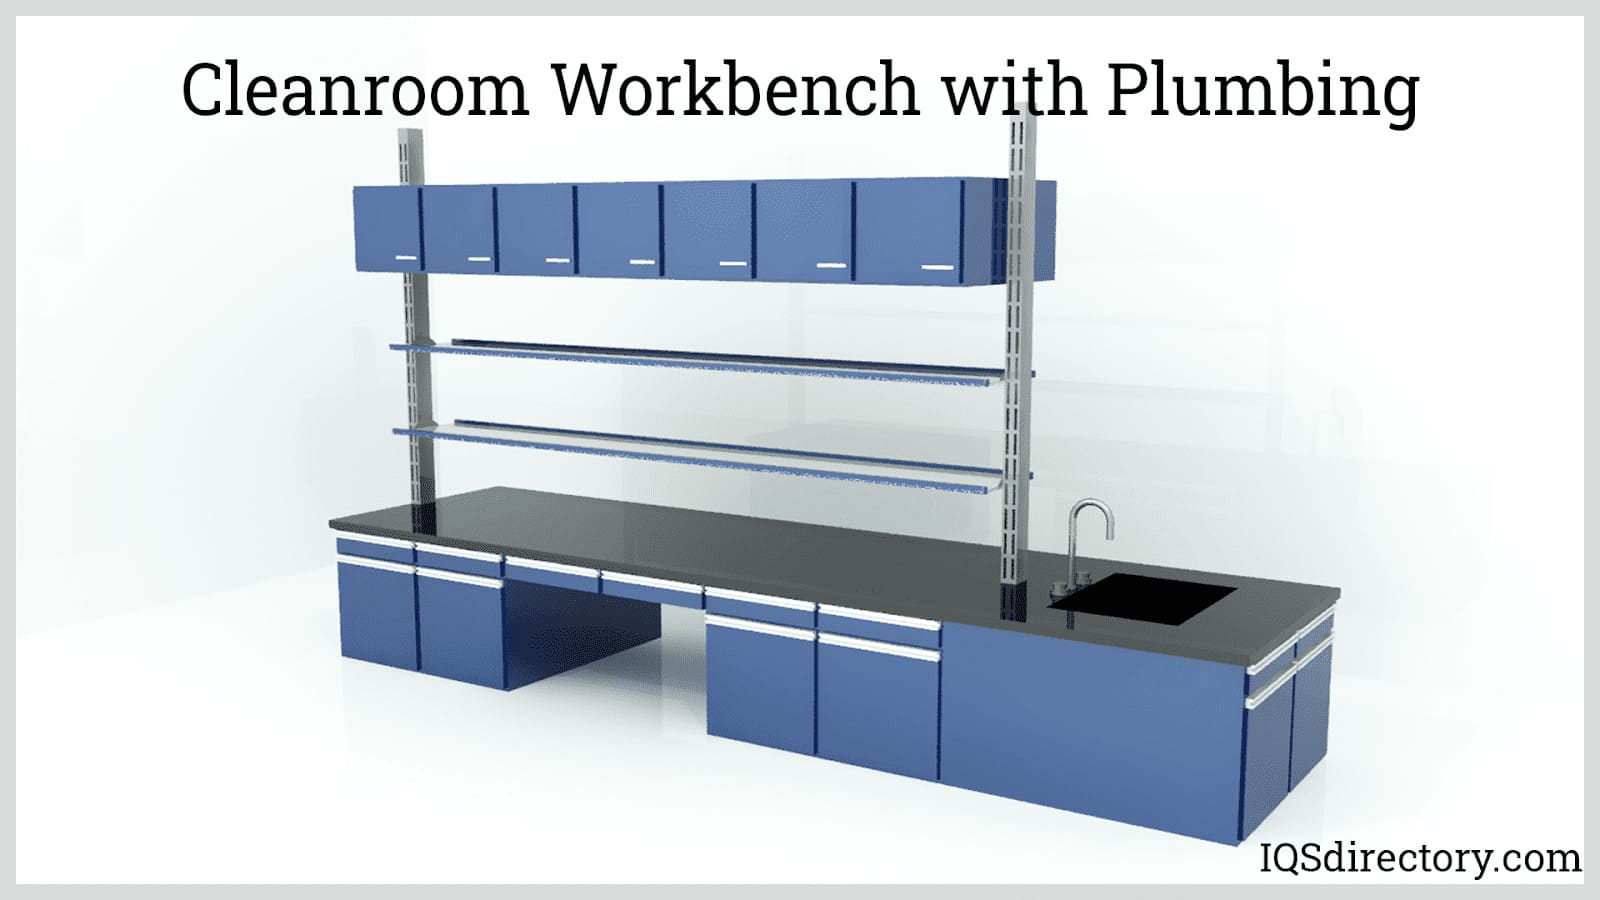 Cleanroom Workbench with Plumbing